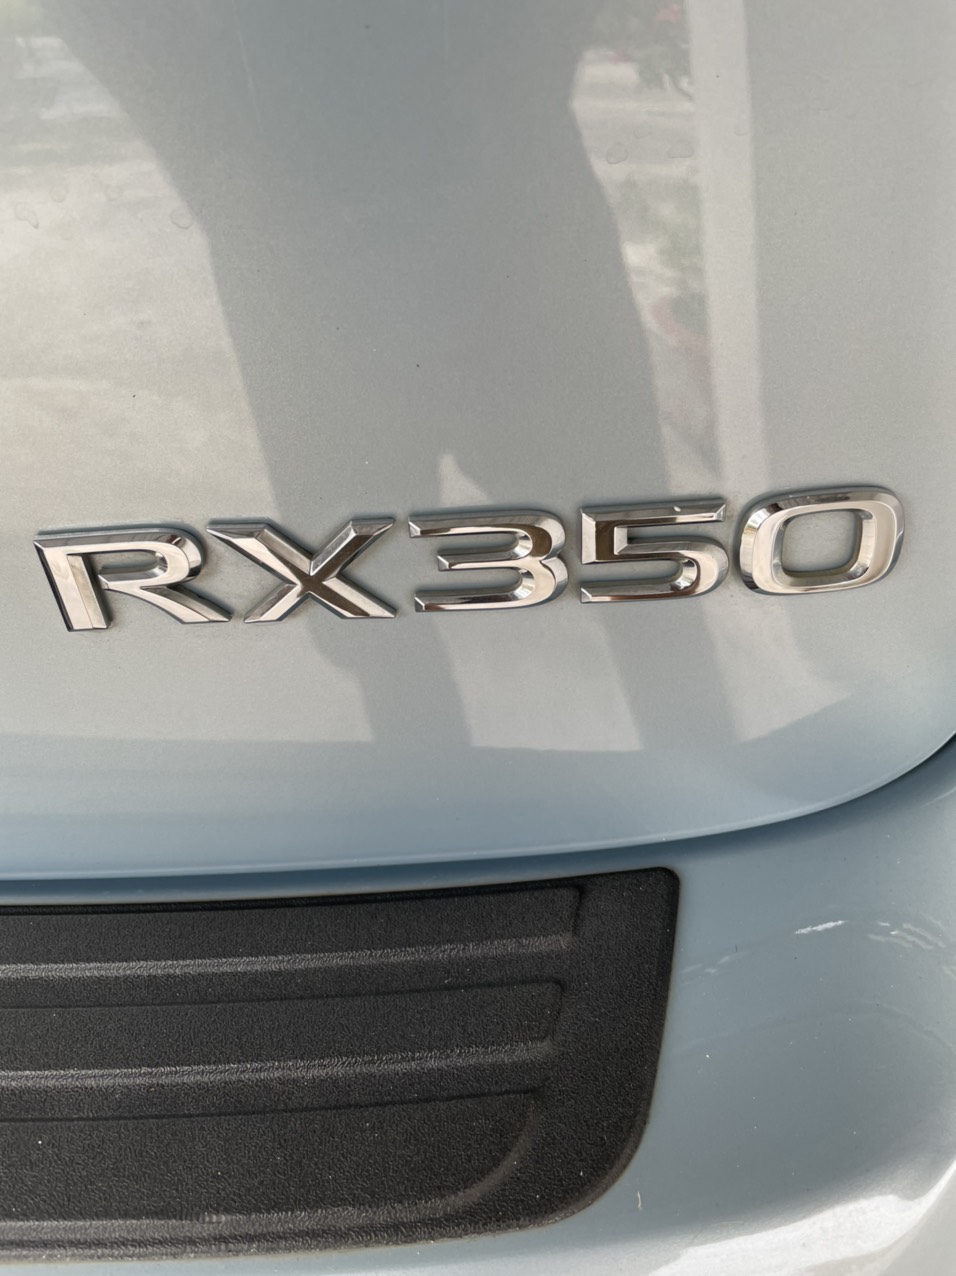 Lexus RX350 2009